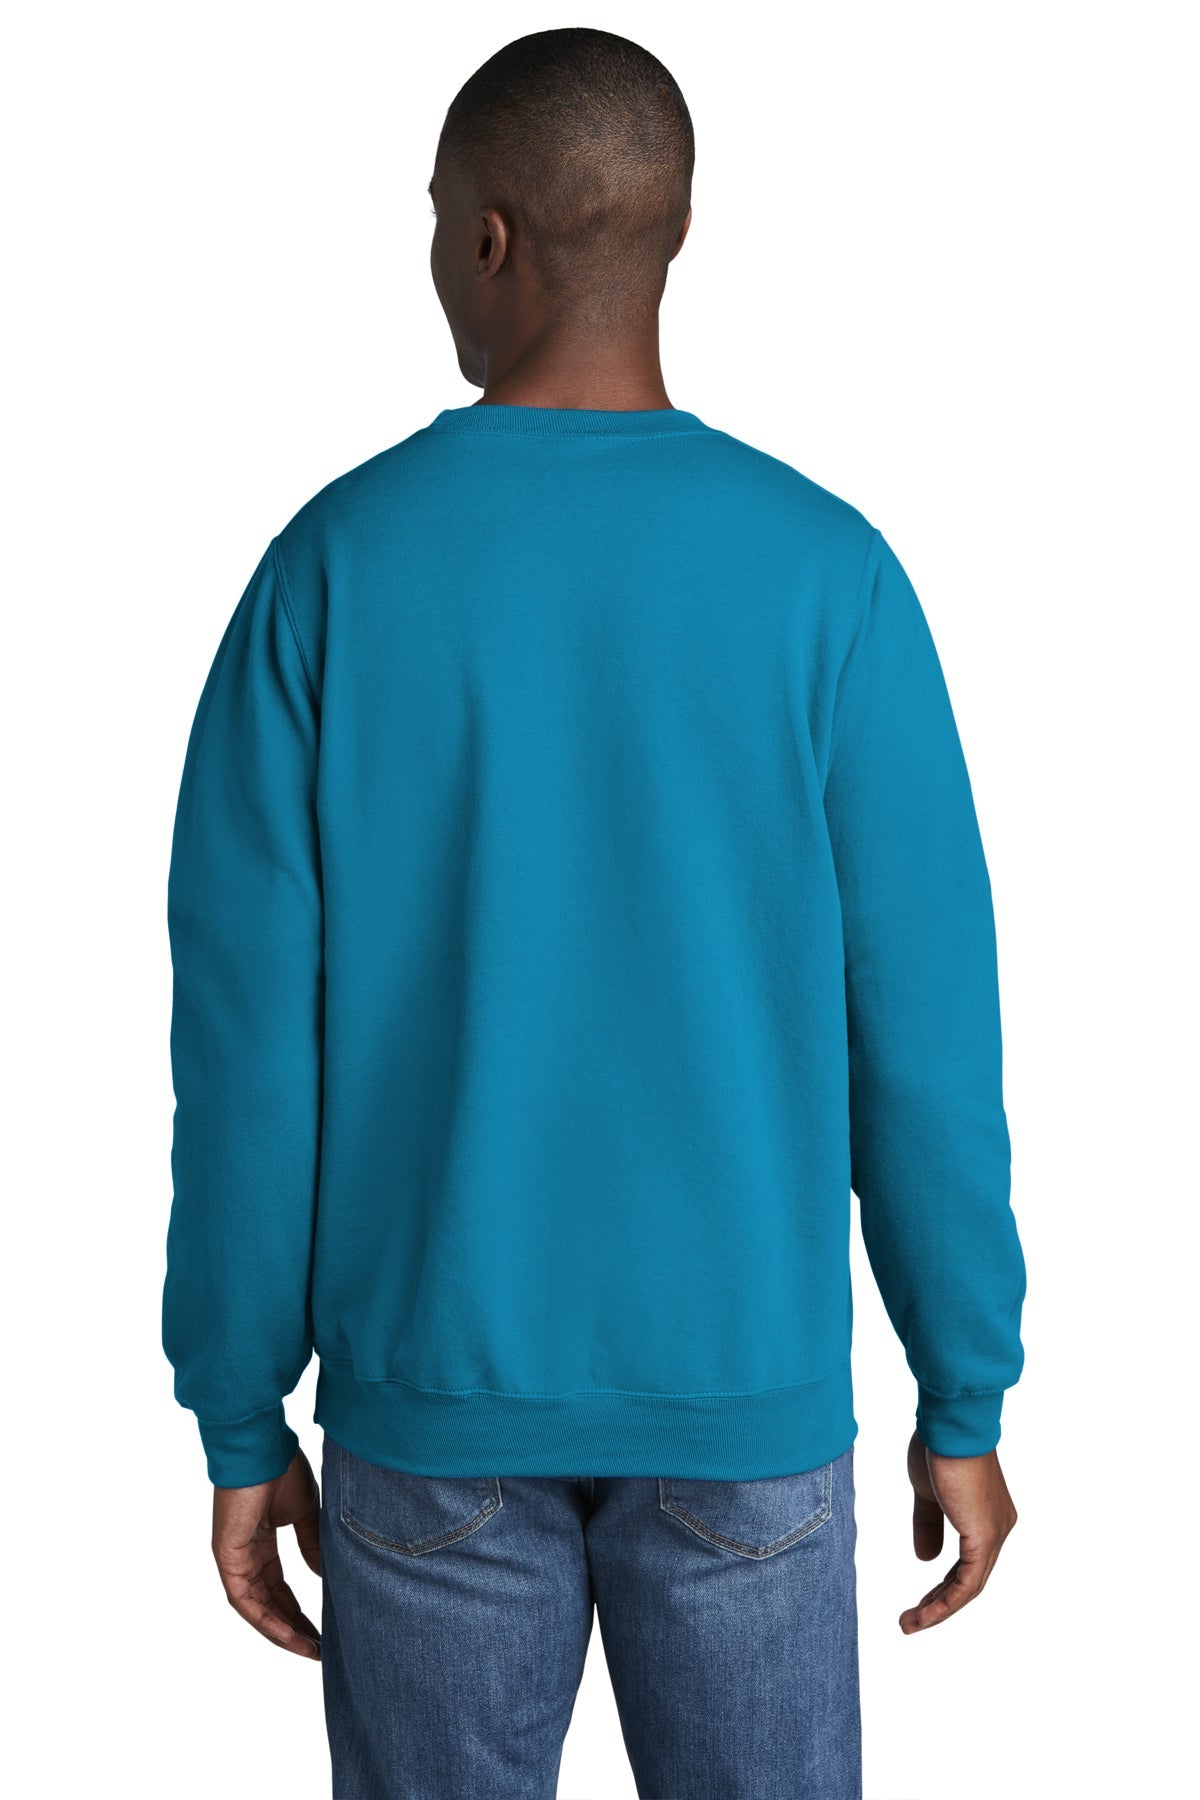 port & company_pc78 _neon blue_company_logo_sweatshirts